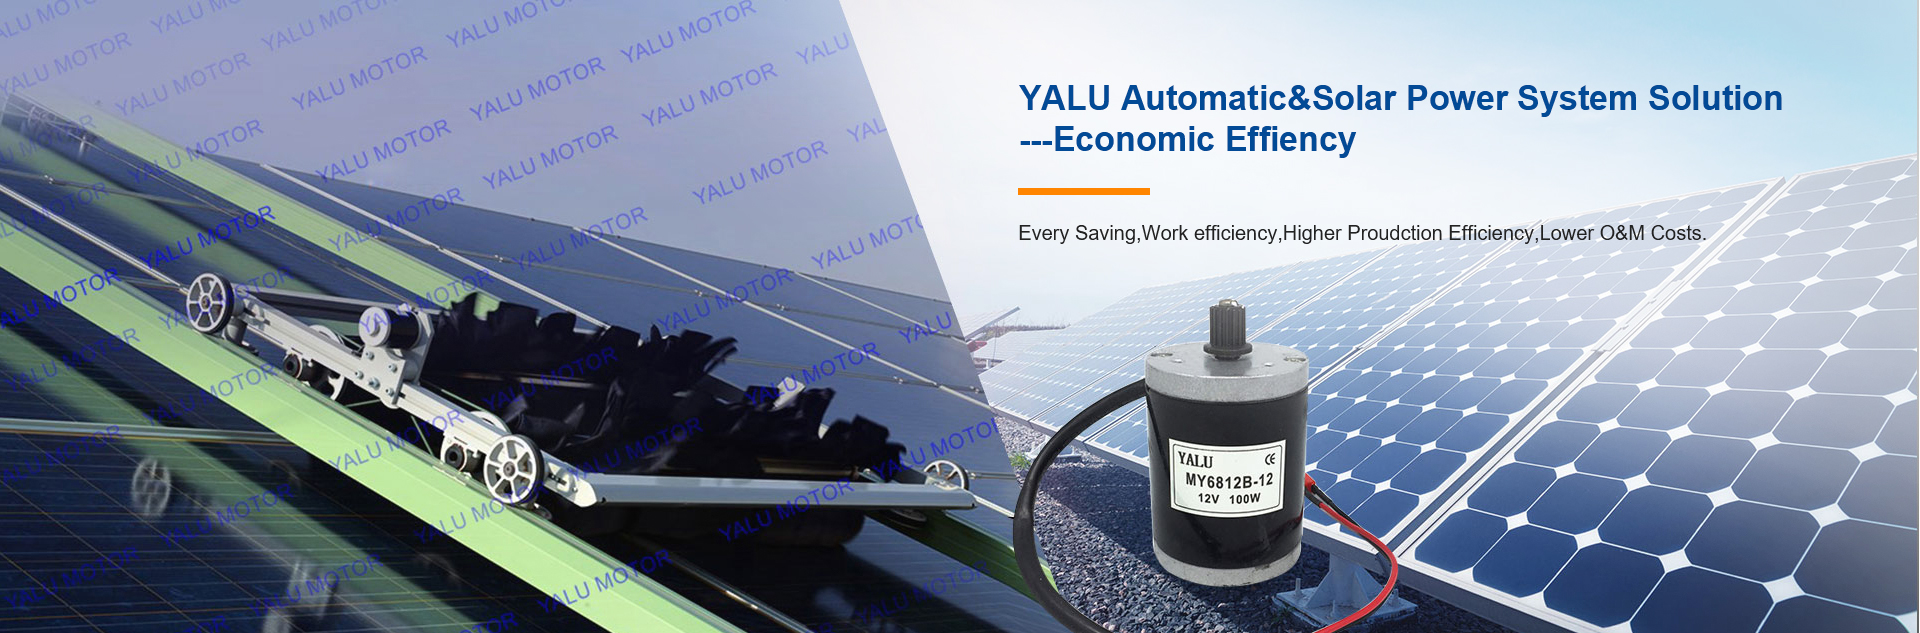 YALU Automatic & Solar Power System Solution | Economic Effiency